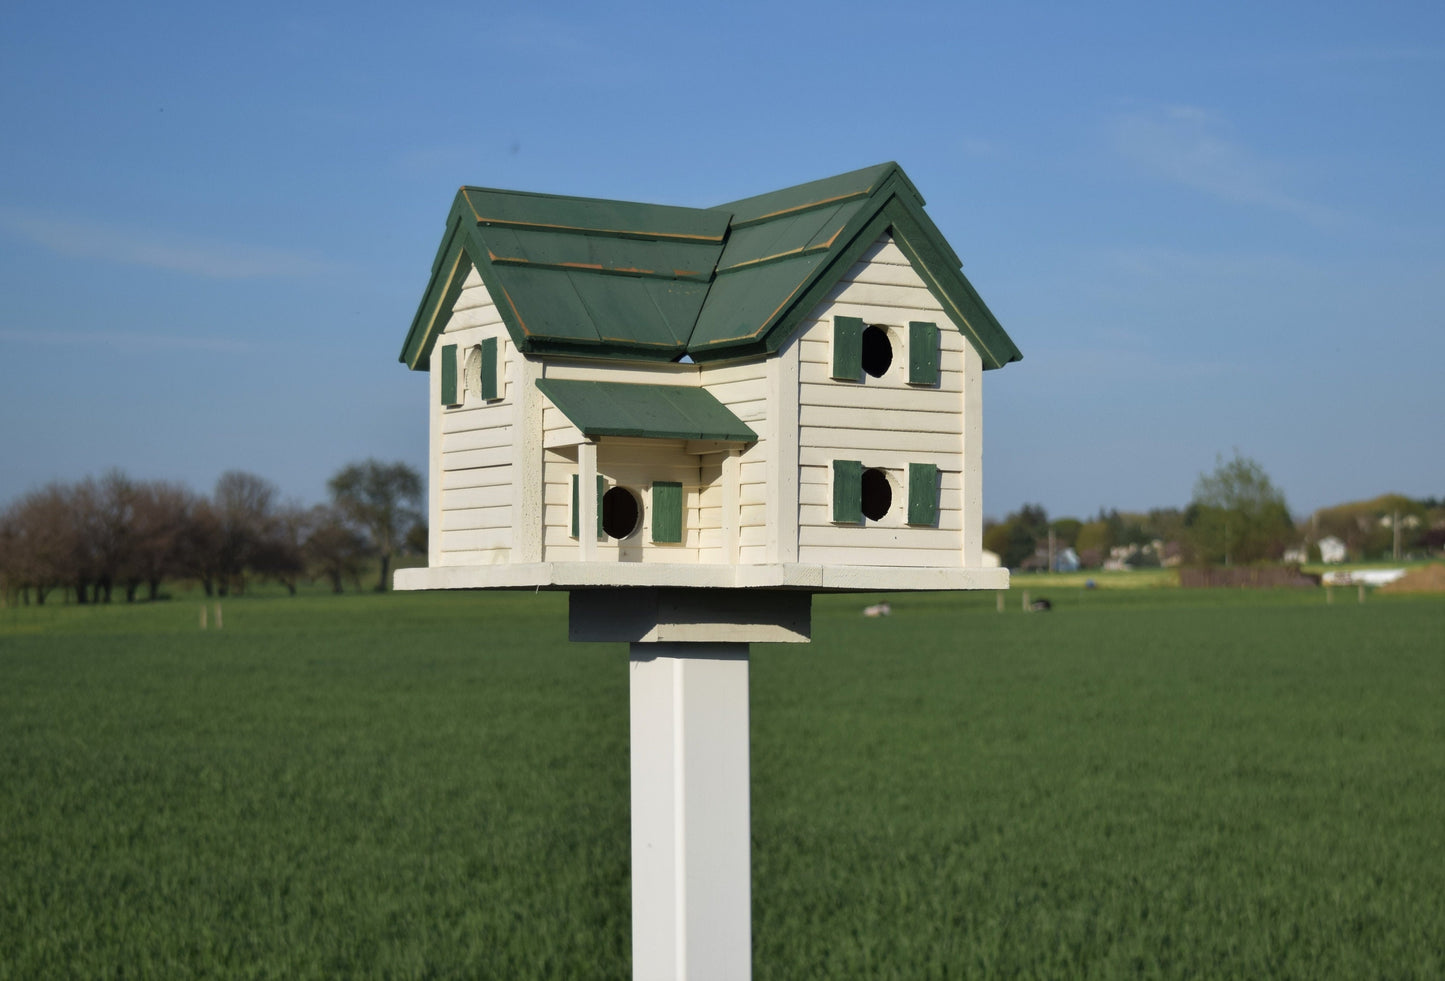 Reclaimed Cottage Birdhouse | Multiple Colors